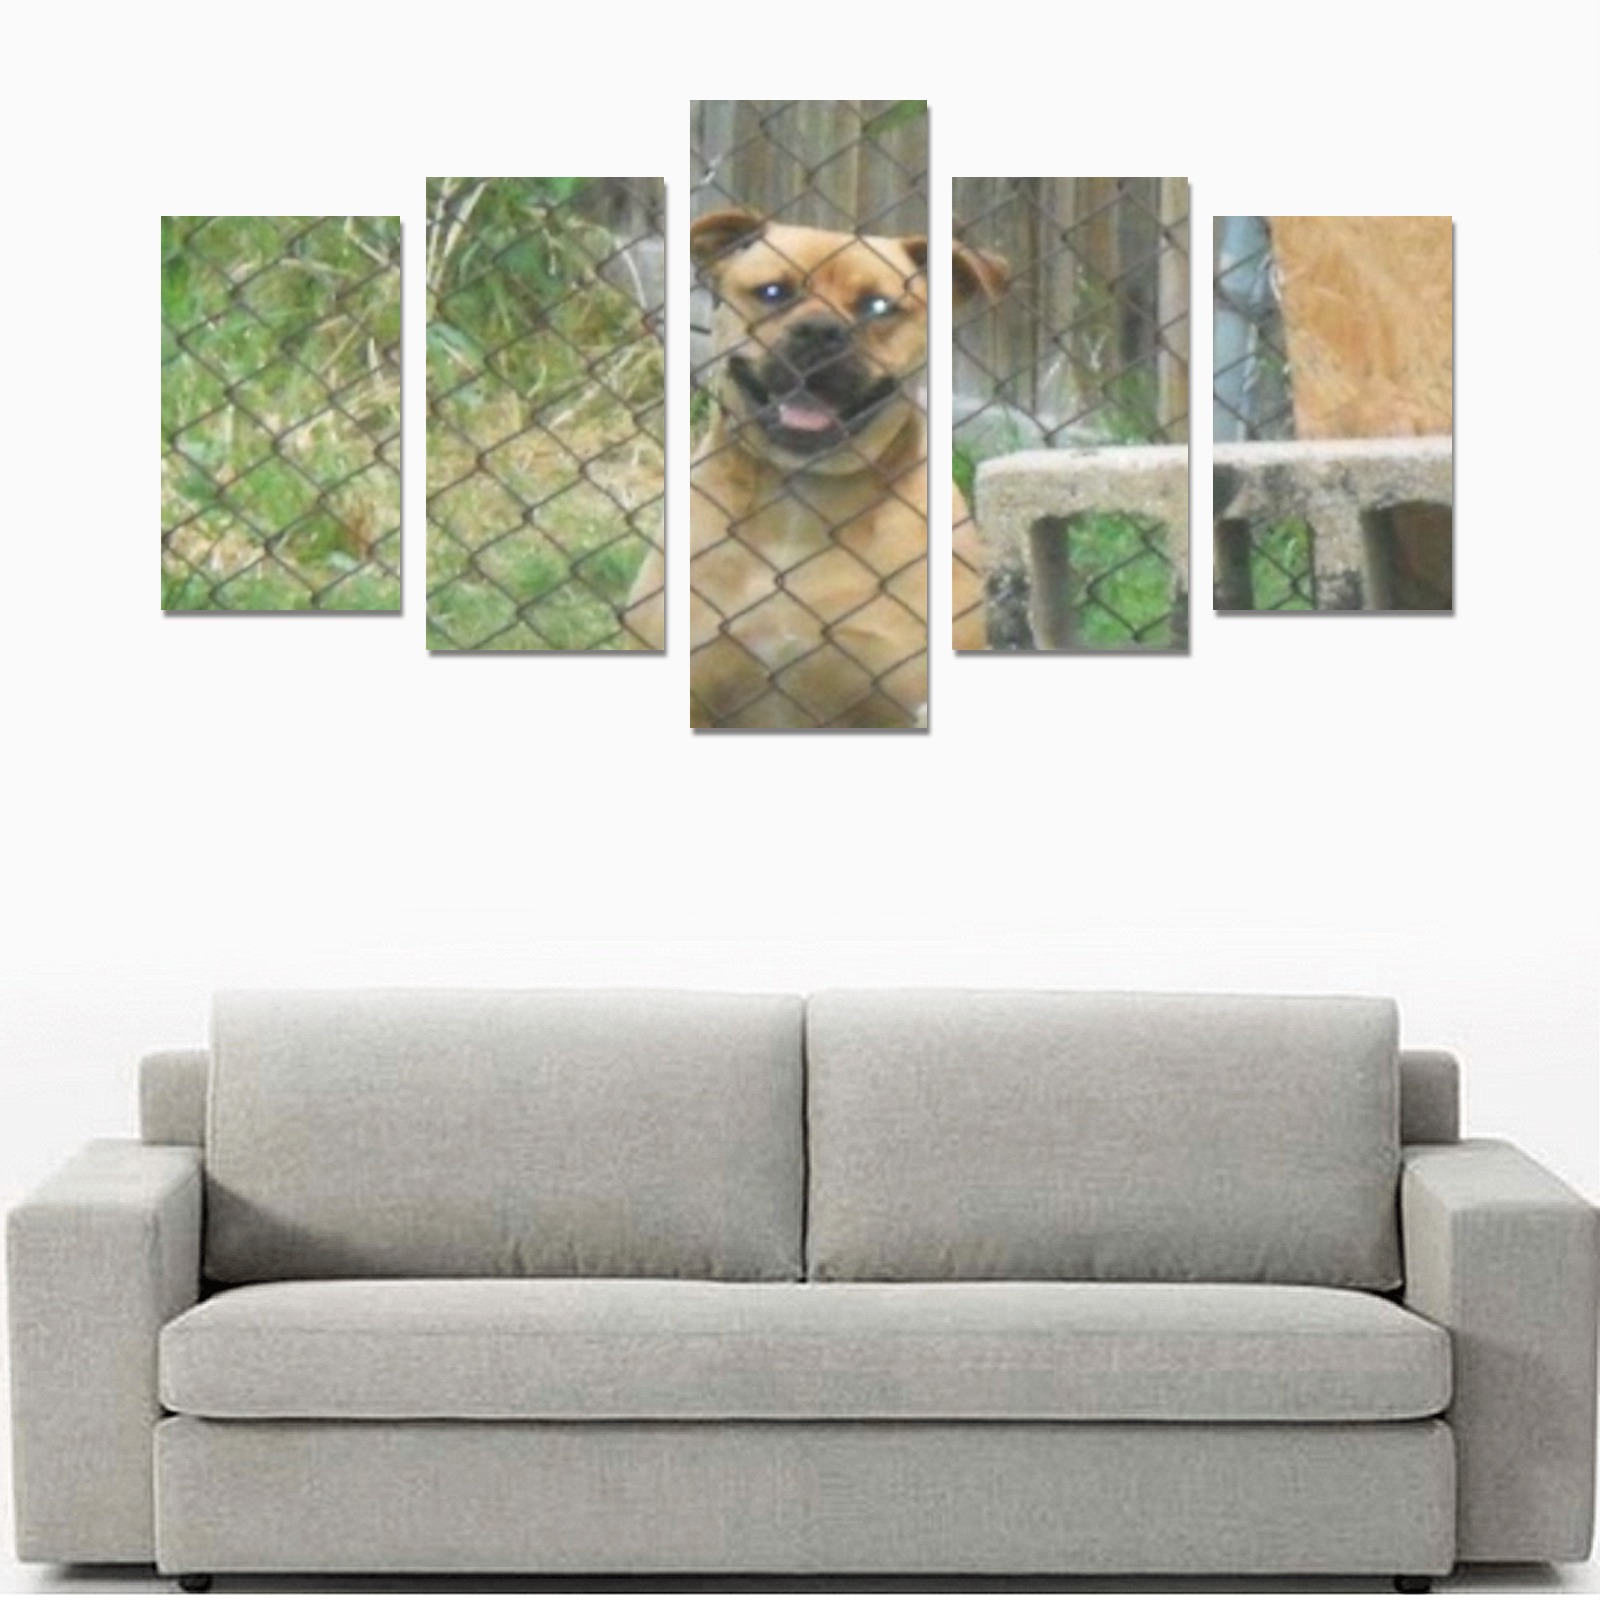 A Smiling Dog Canvas Print Sets C (No Frame)